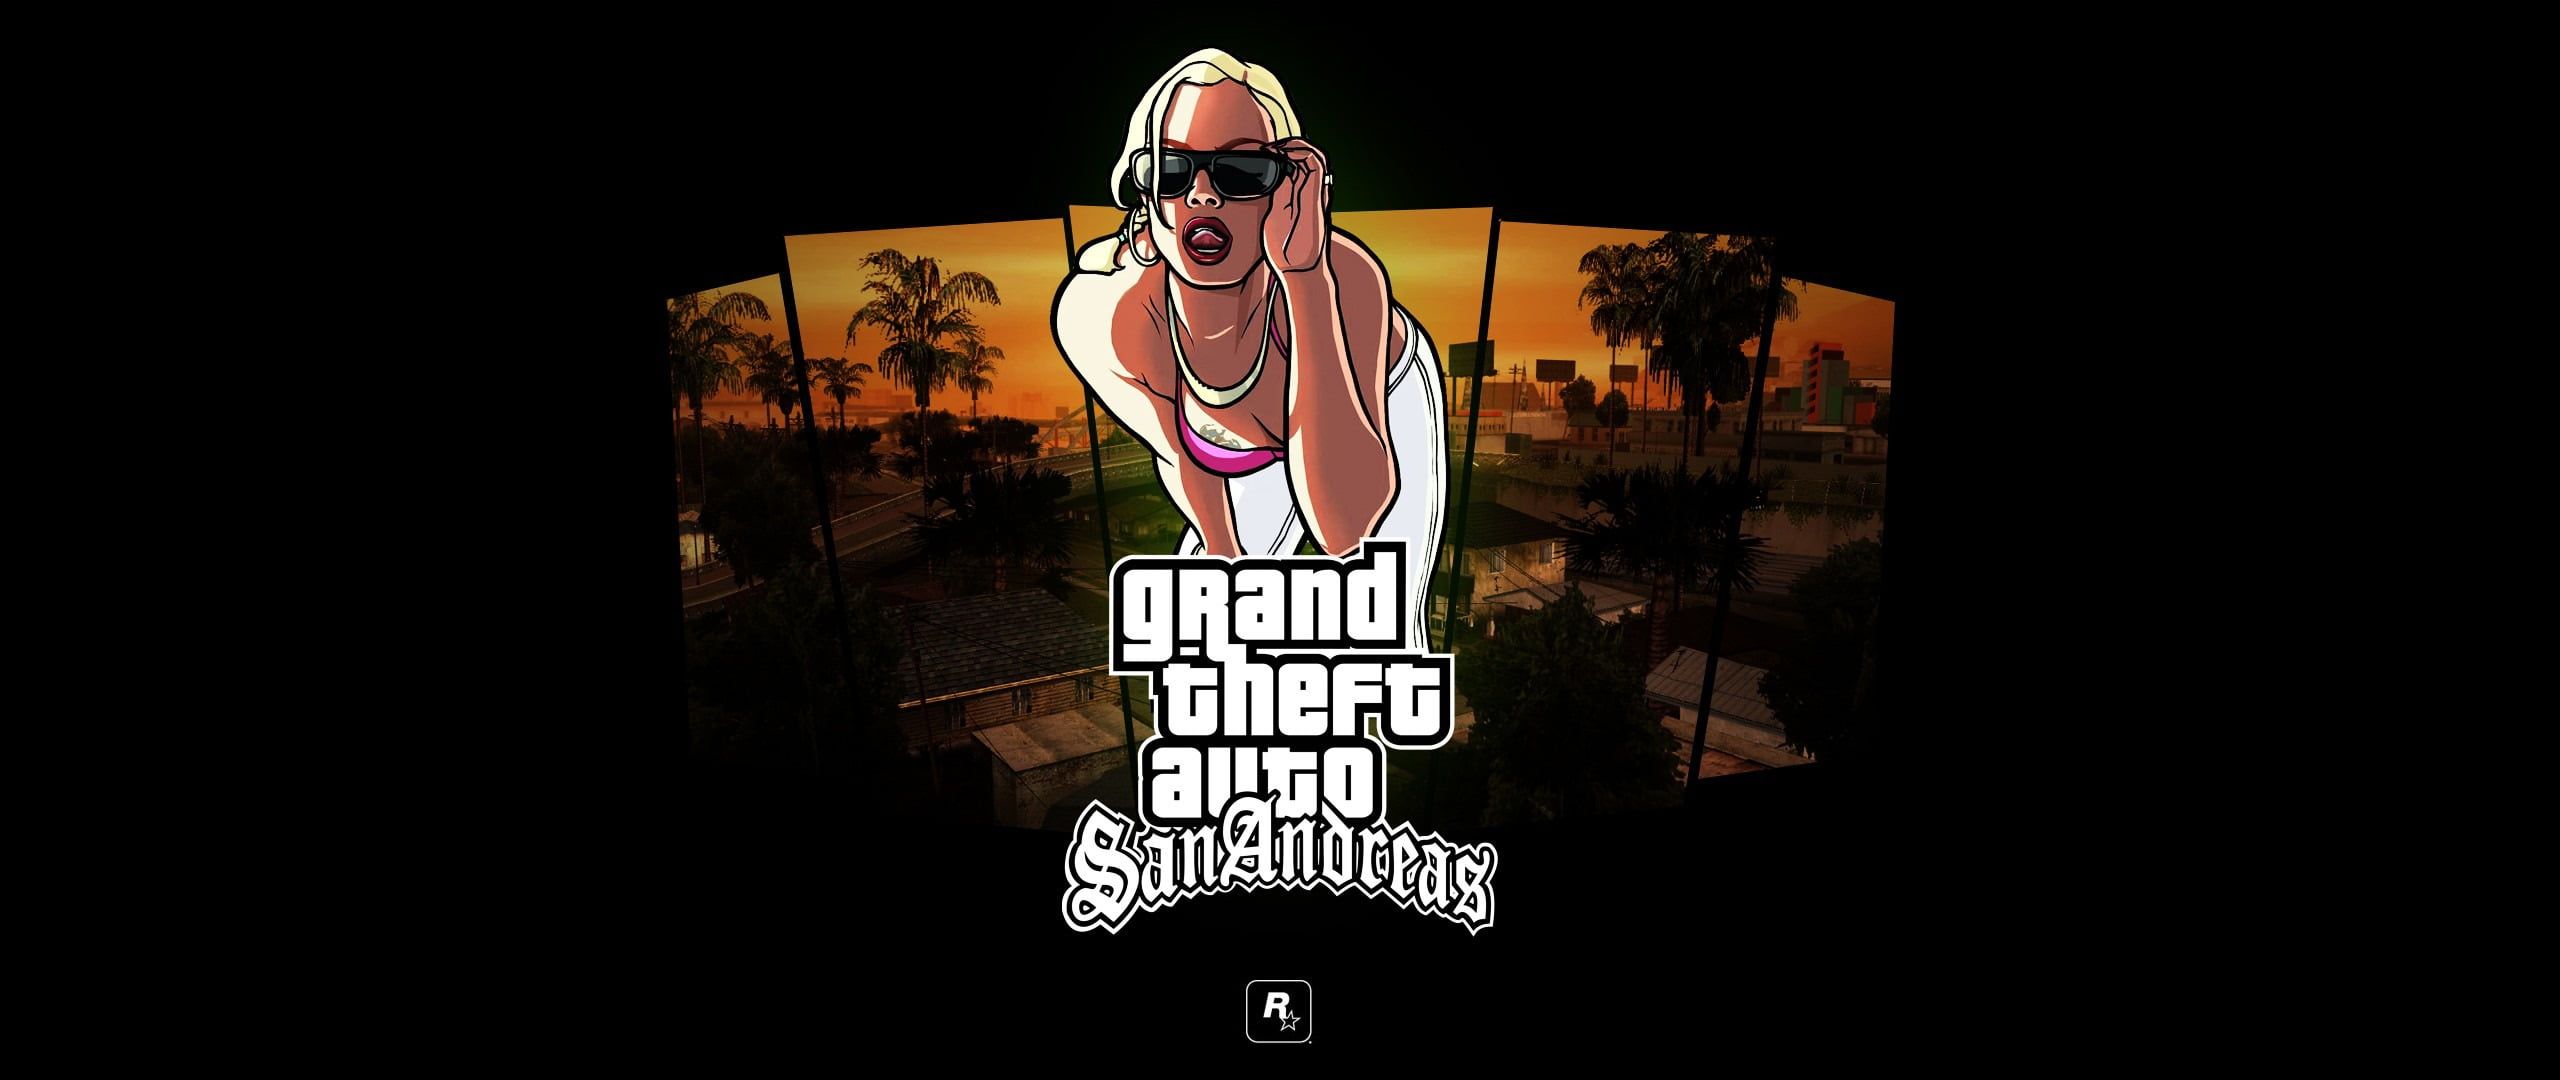 Grand Theft Auto San Andreas Wallpaper #ultra Wide Video Games Grand Theft Auto Grand Theft Auto San Andrea. Grand Theft Auto Games, Grand Theft Auto, San Andreas